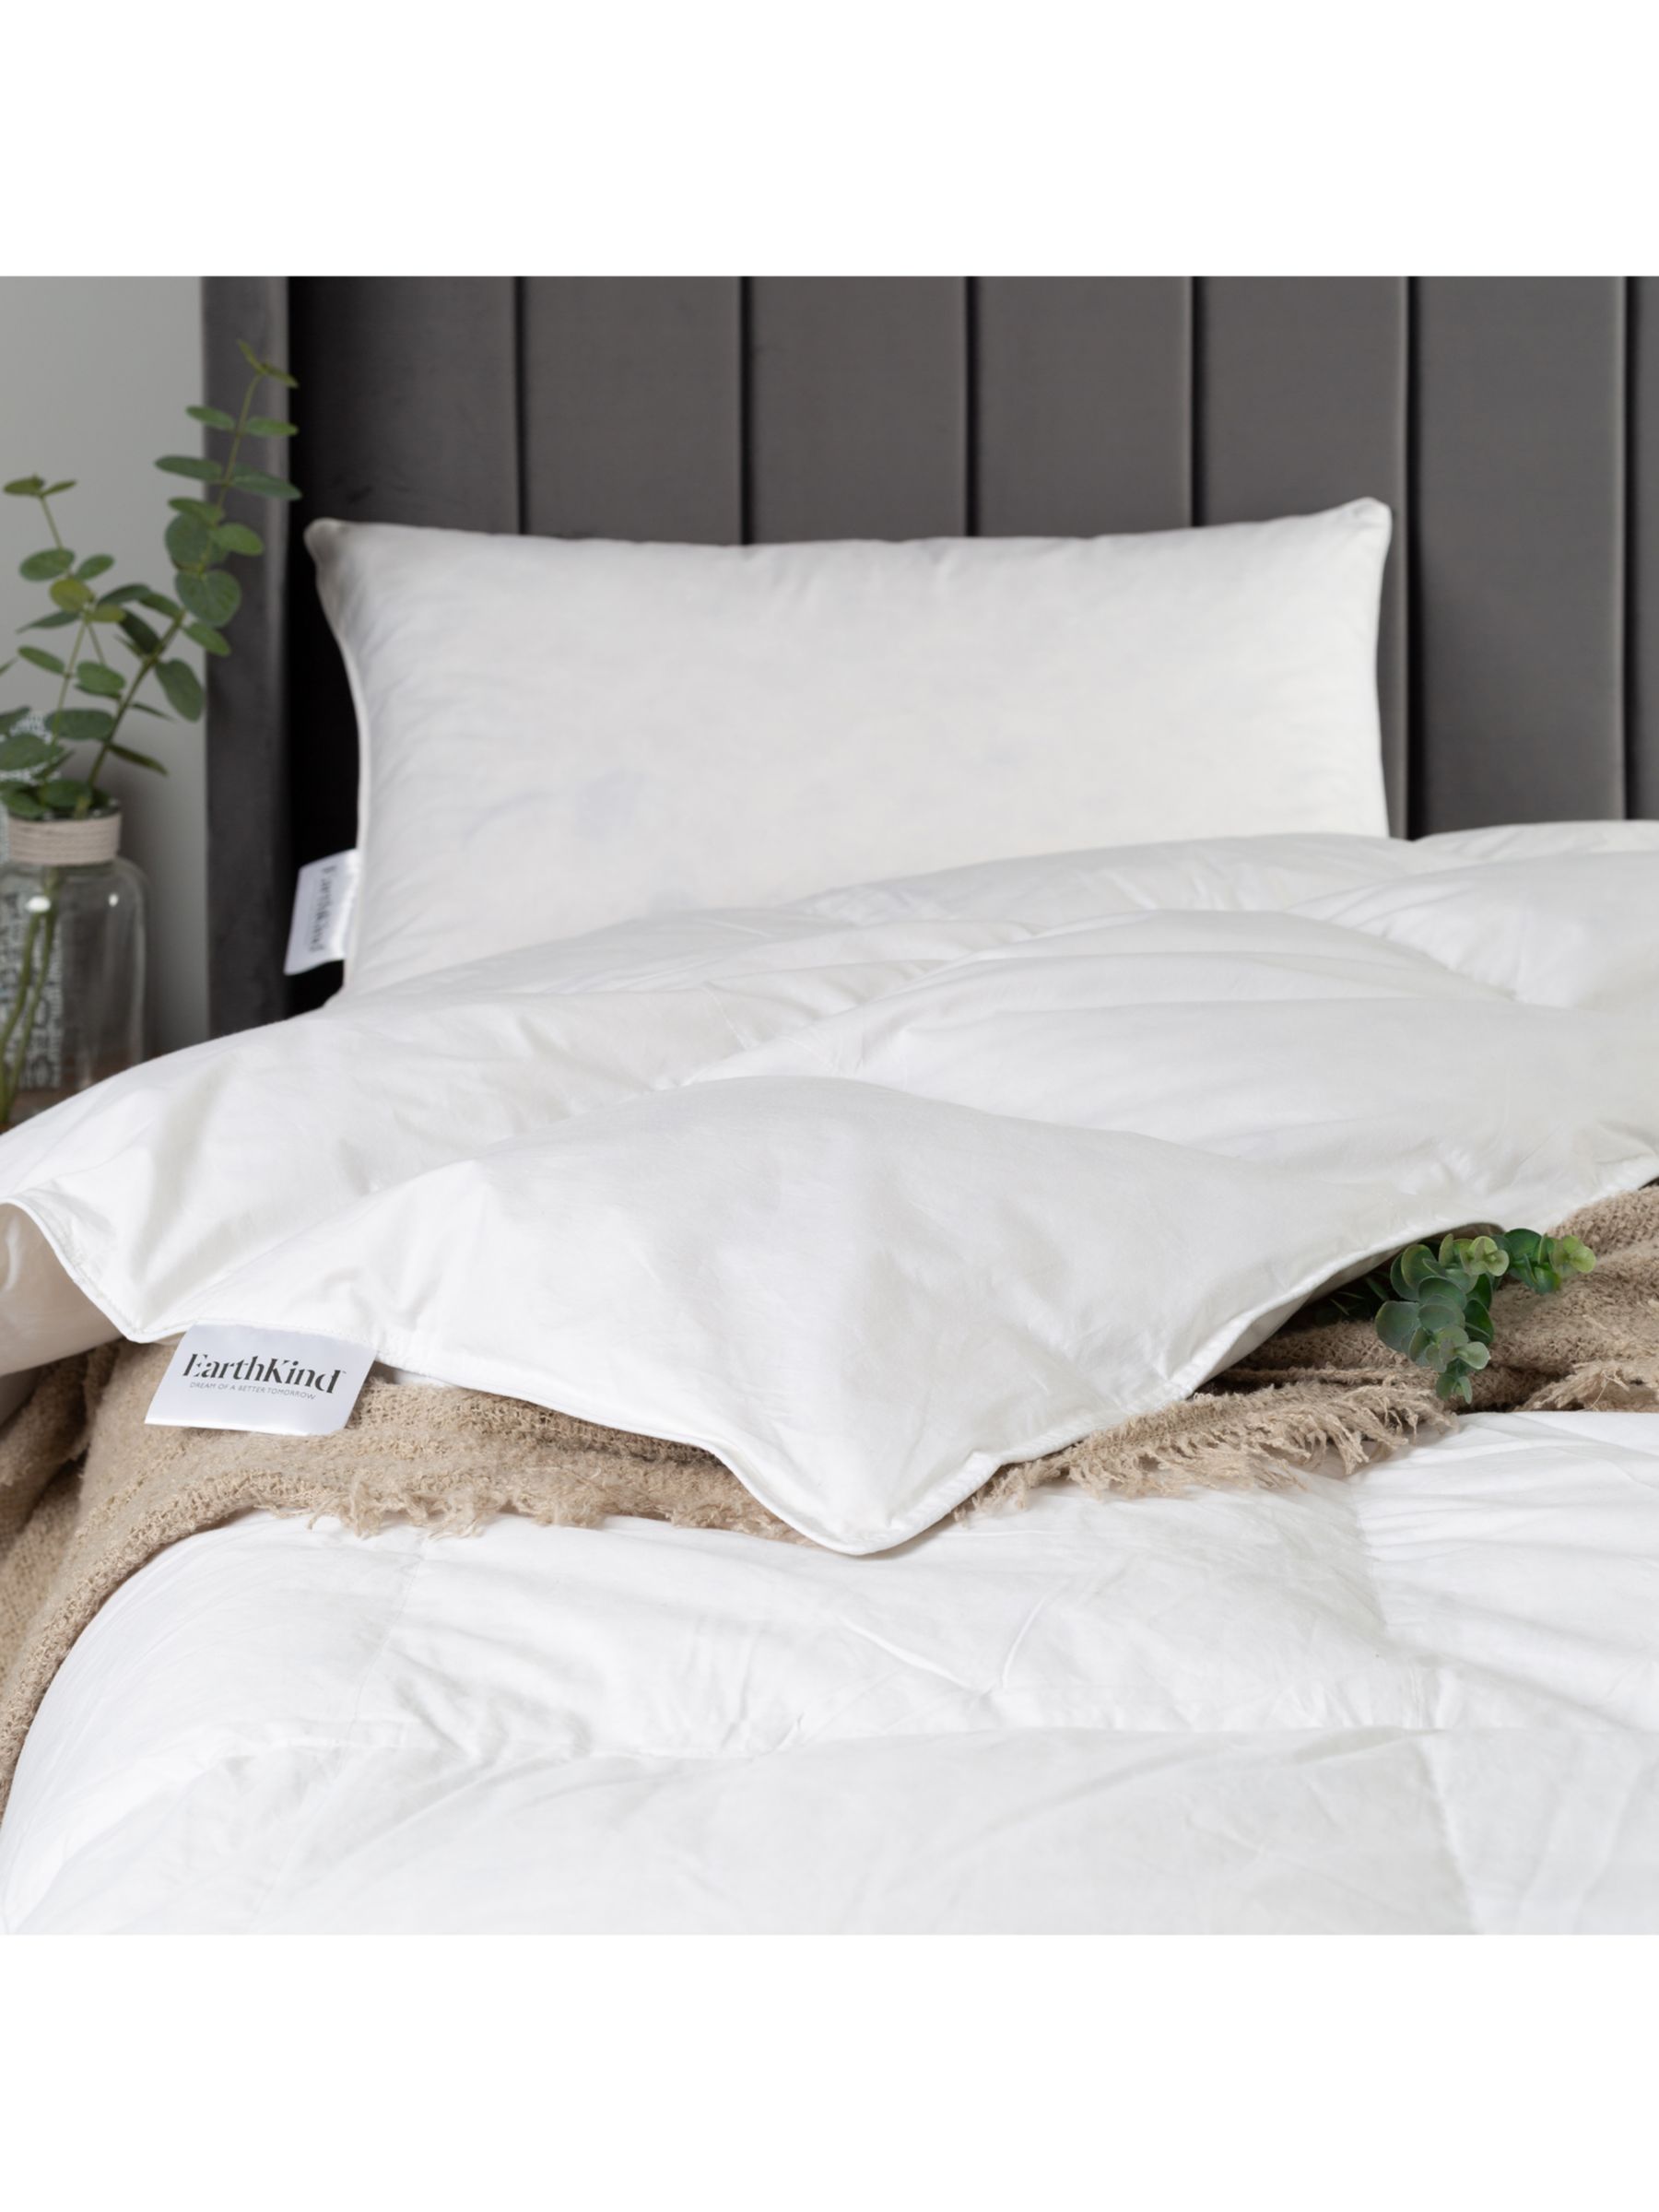 Ikea ANGSLILJA King Duvet Cover Gray 100% Cotton Snap Closure (2 available)